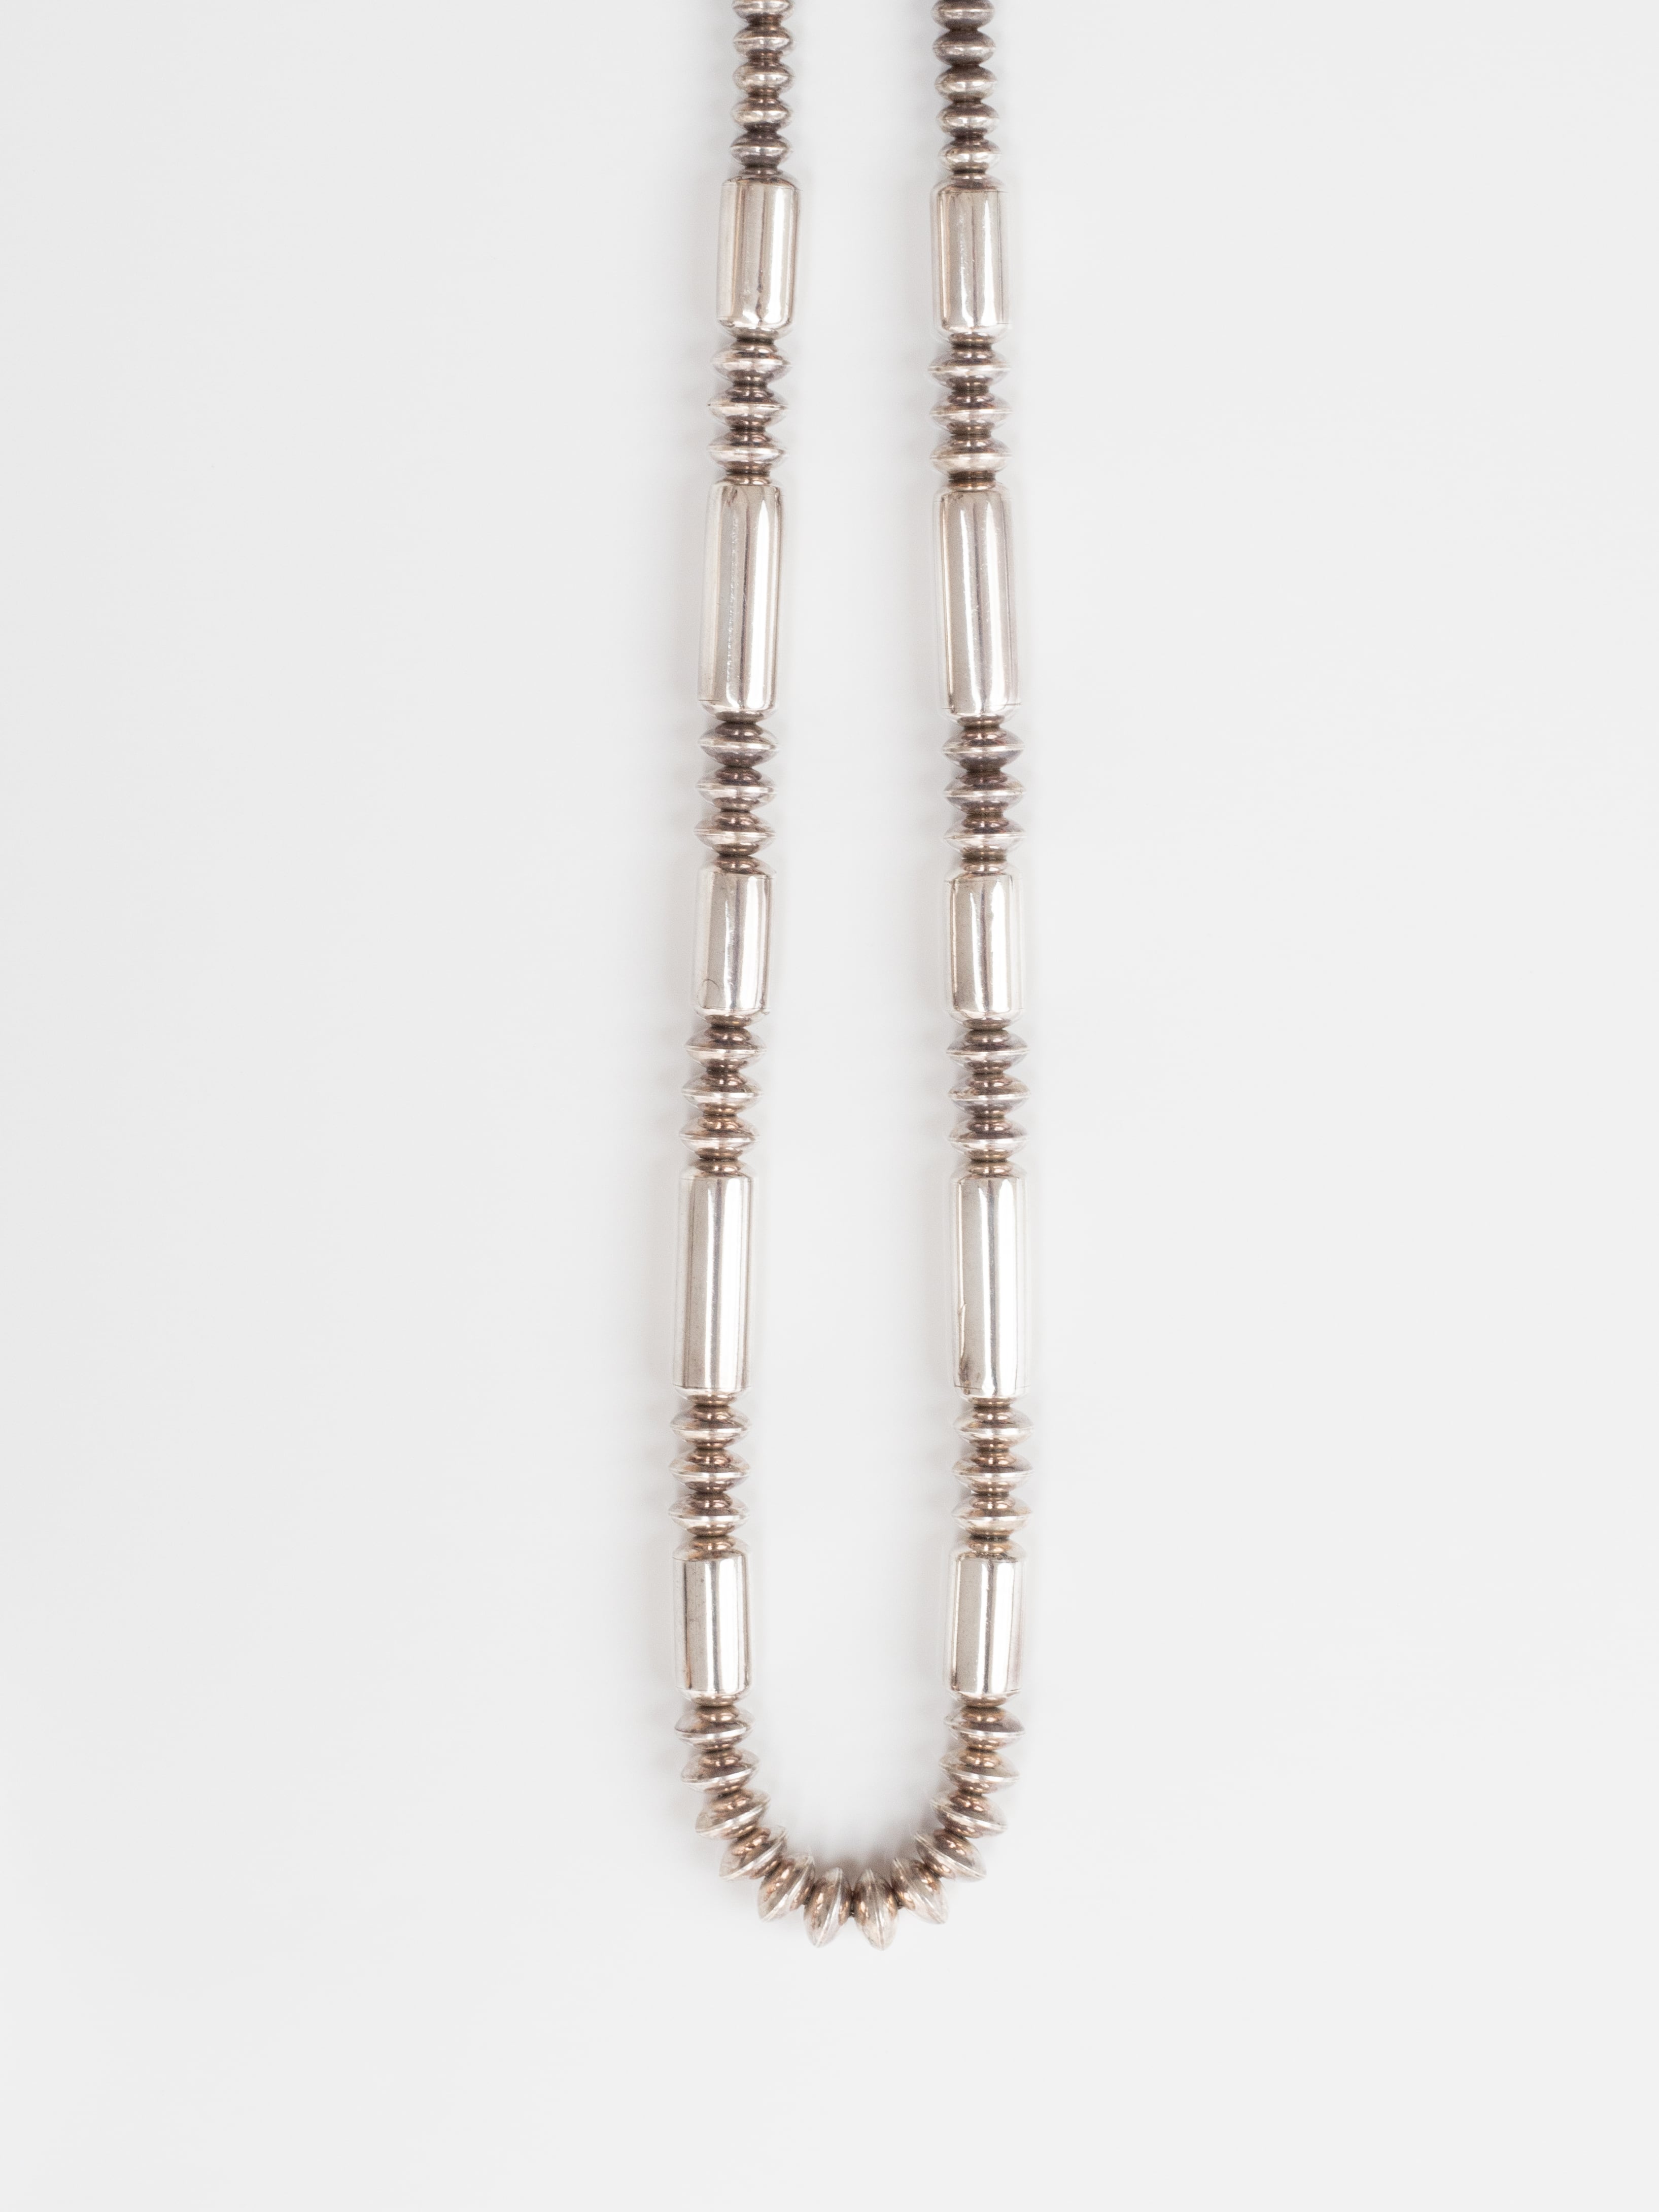 Barrel Beads Necklace - Navajo